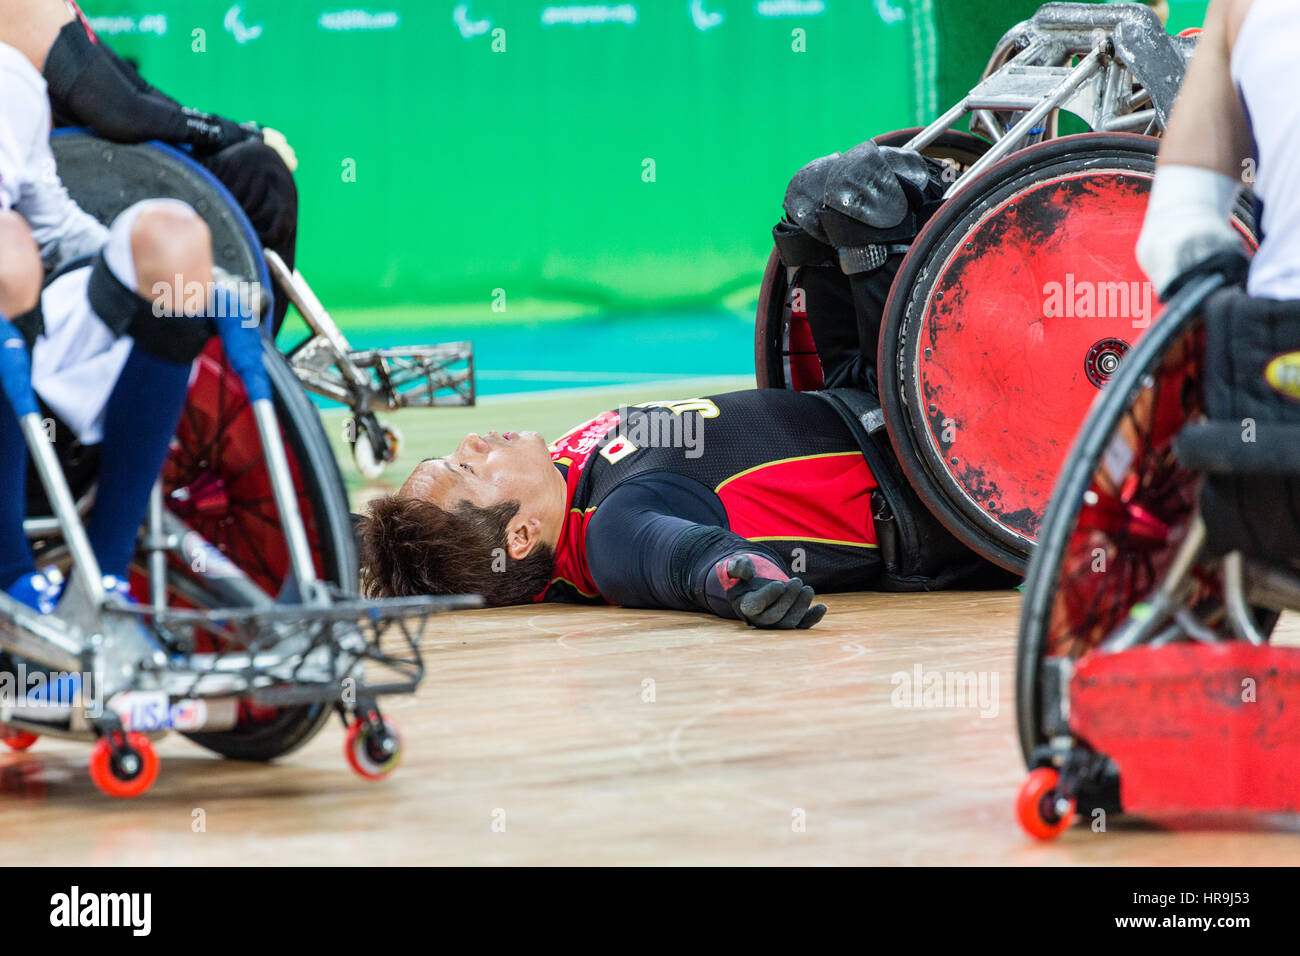 Rio 2016 Paralympic Games - Stock Photo